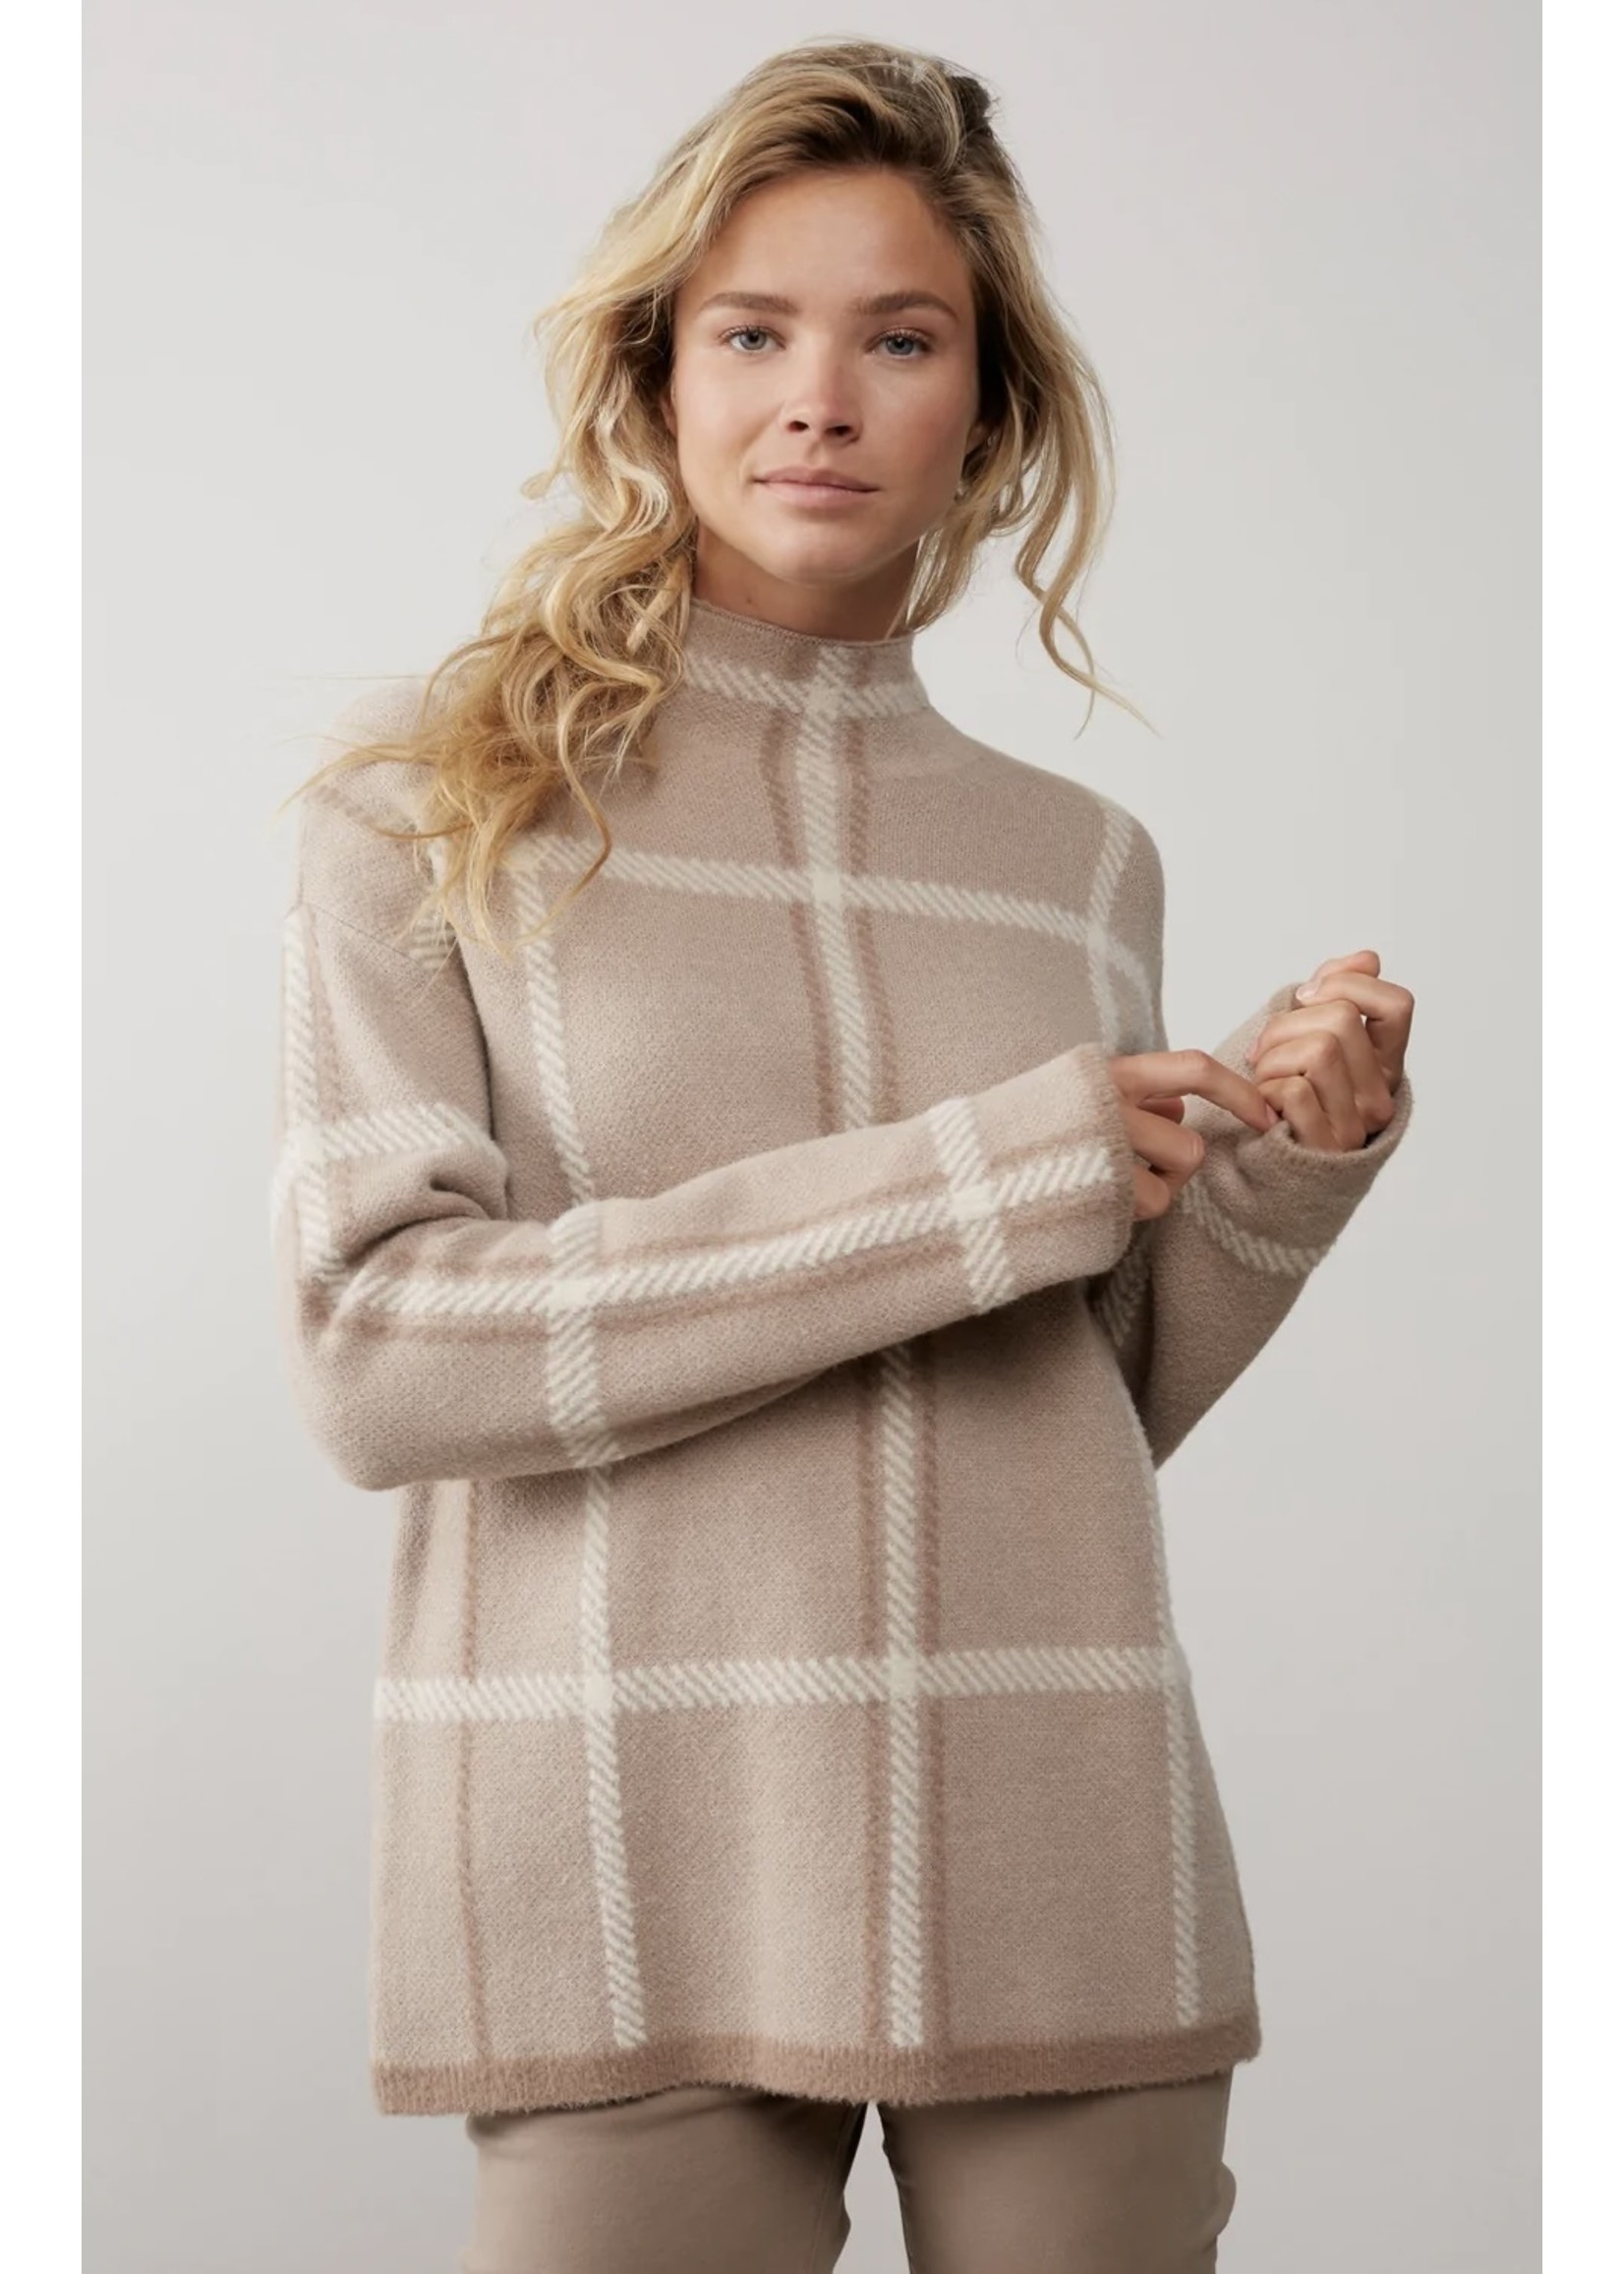 Yaya Yaya - Turtleneck Sweater in a check pattern with long sleeves